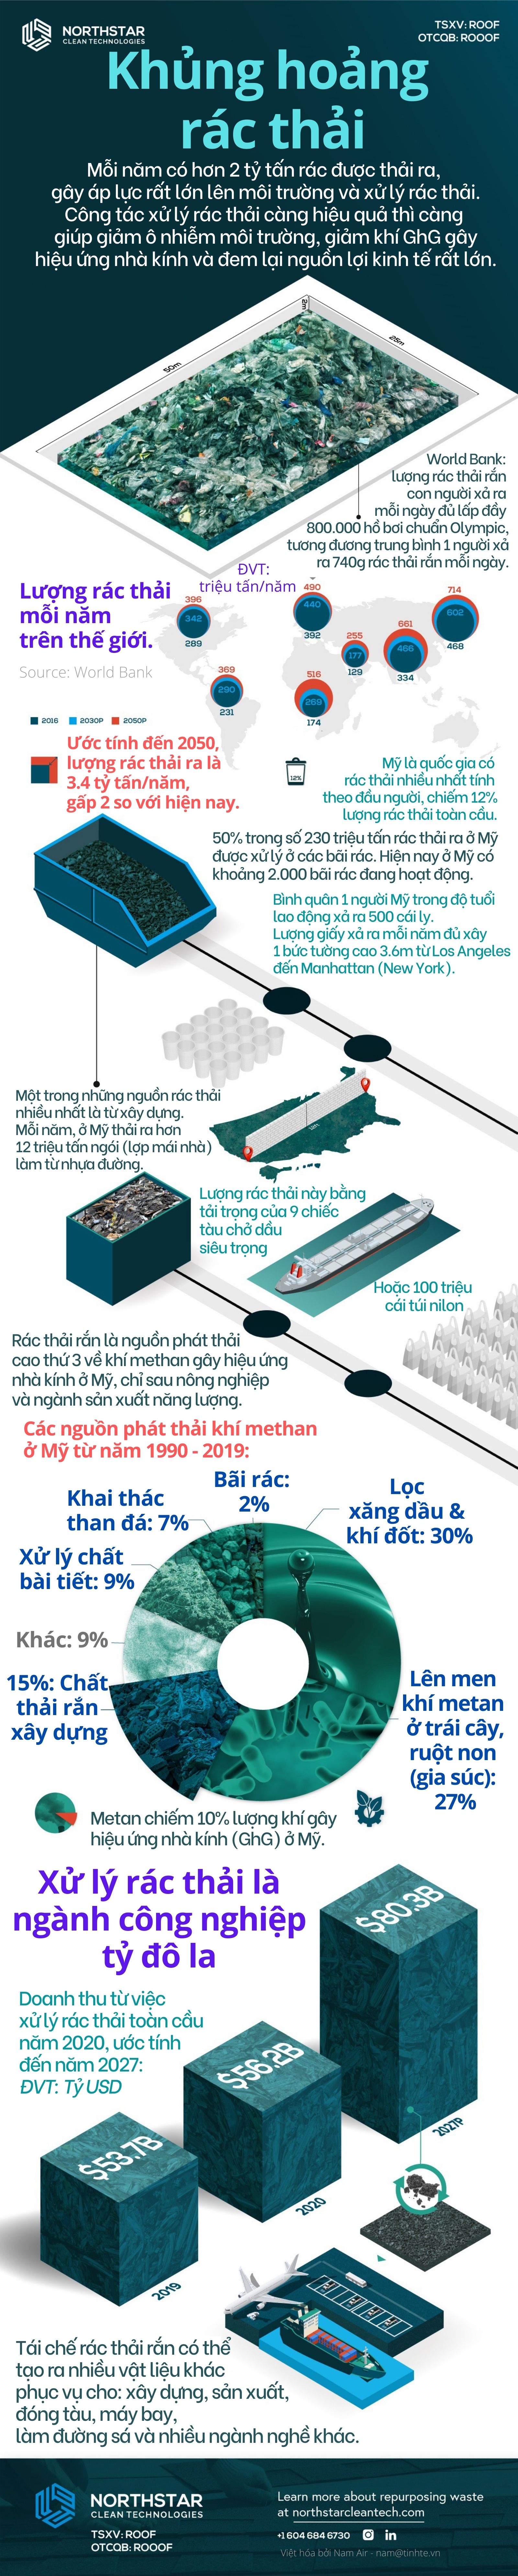 tinhte-infographic-khung-hoang-rac-thai.jpg